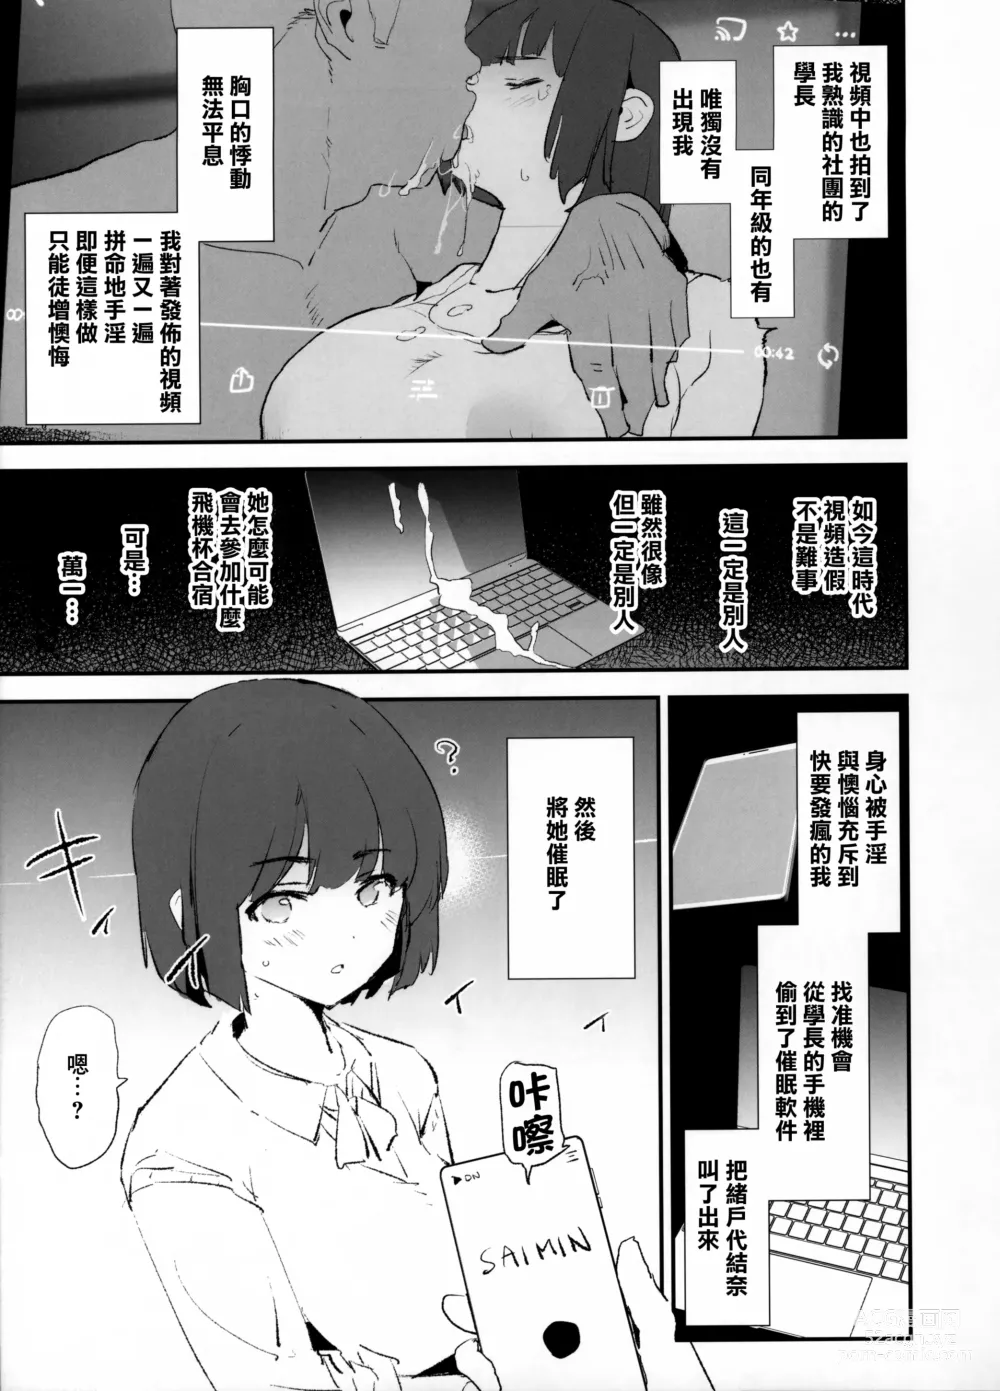 Page 7 of doujinshi 唯獨沒有叫上我的飛機杯合宿 + 紗季學姐